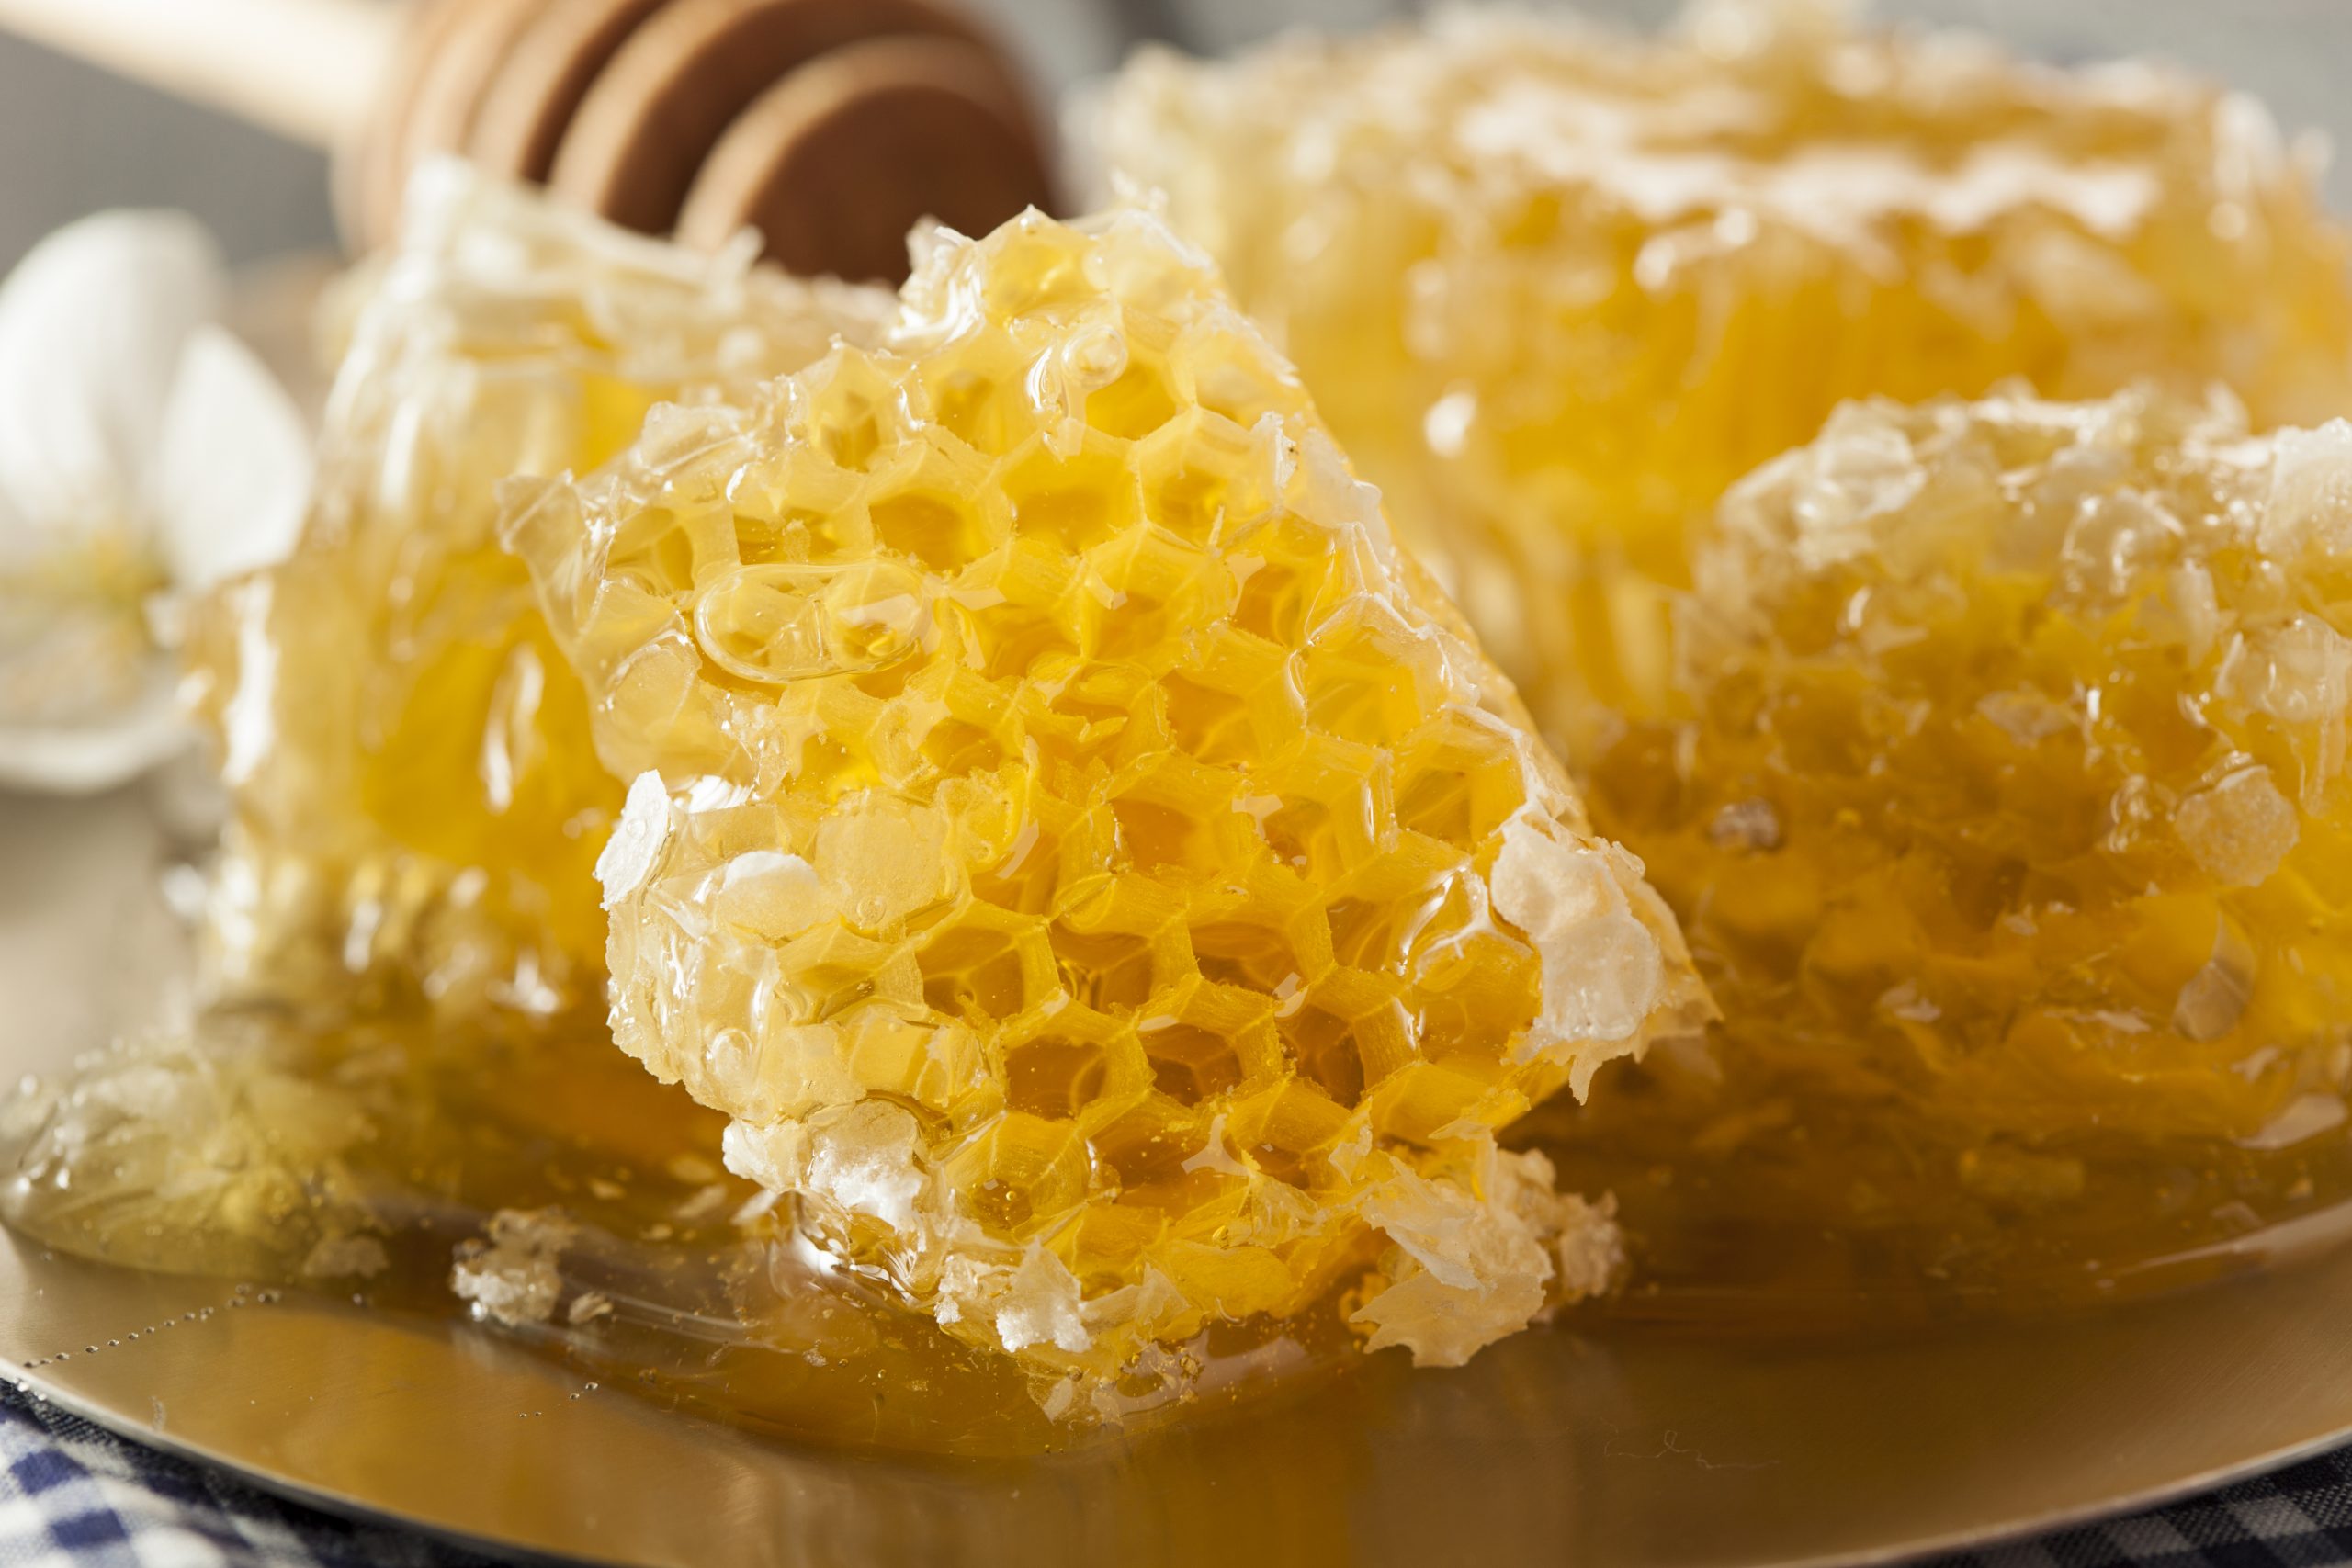 How to Store Raw Honey